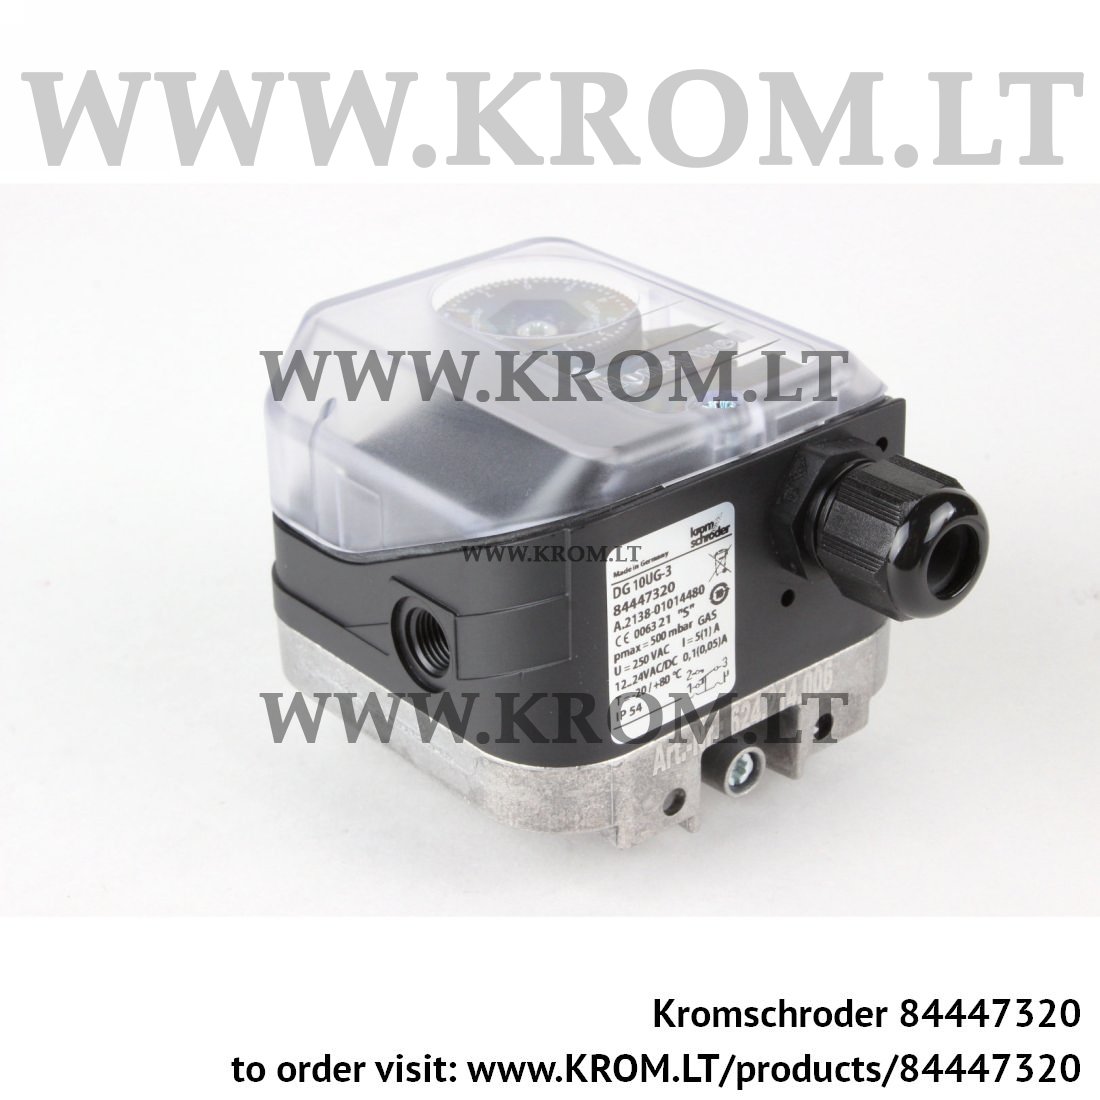 Kromschroder DG 10UG-3, 84447320 pressure switch for gas | Online